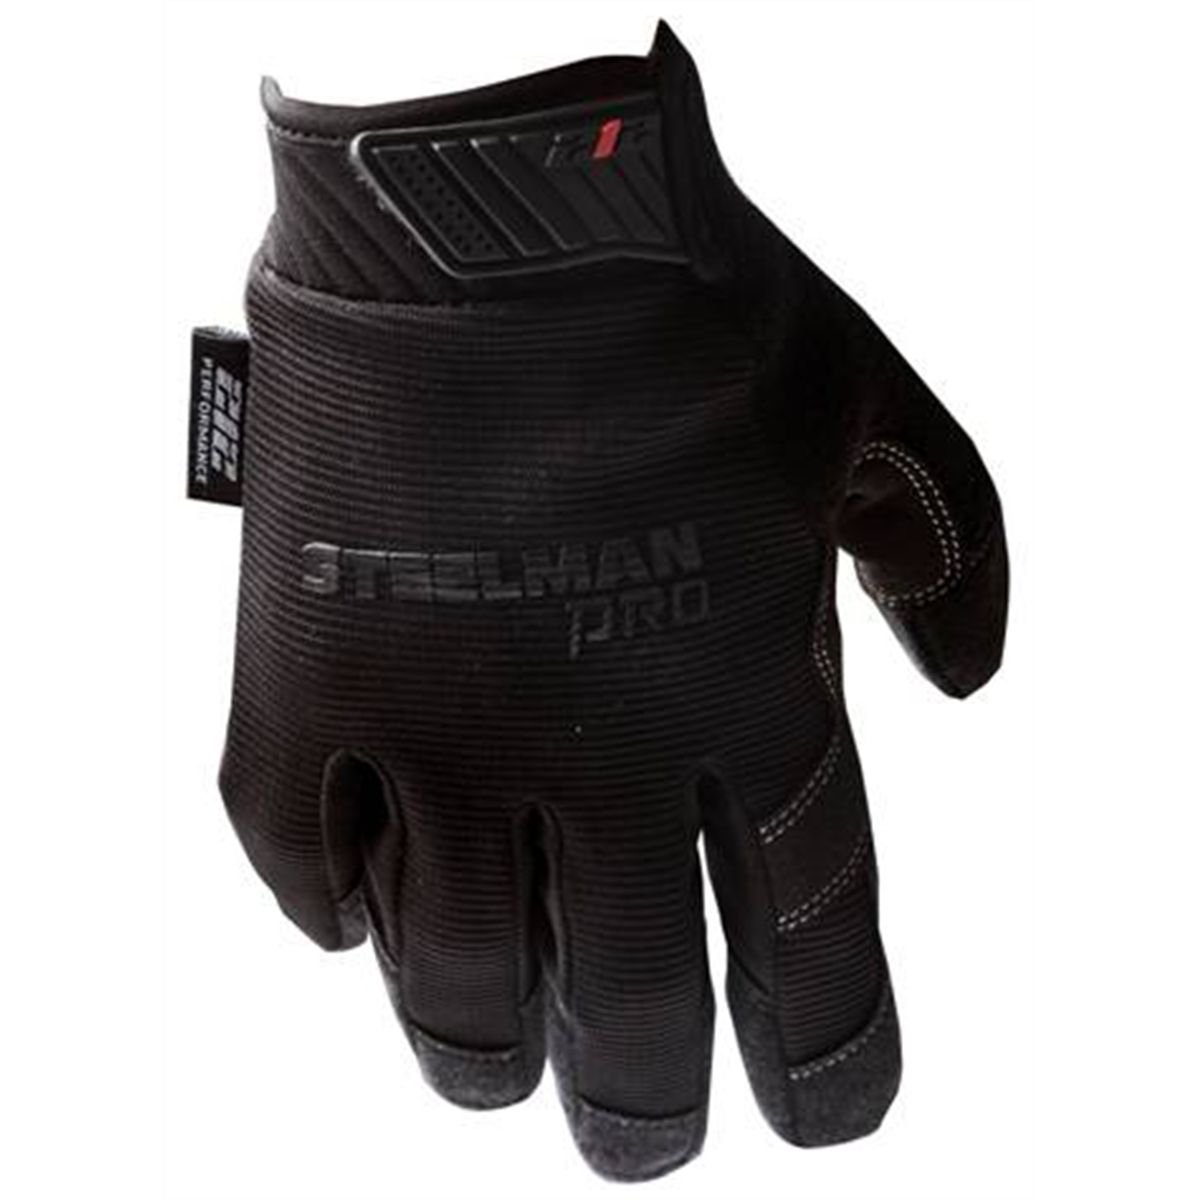 Steelman Pro Touchscreen Mechanic Work Gloves Small